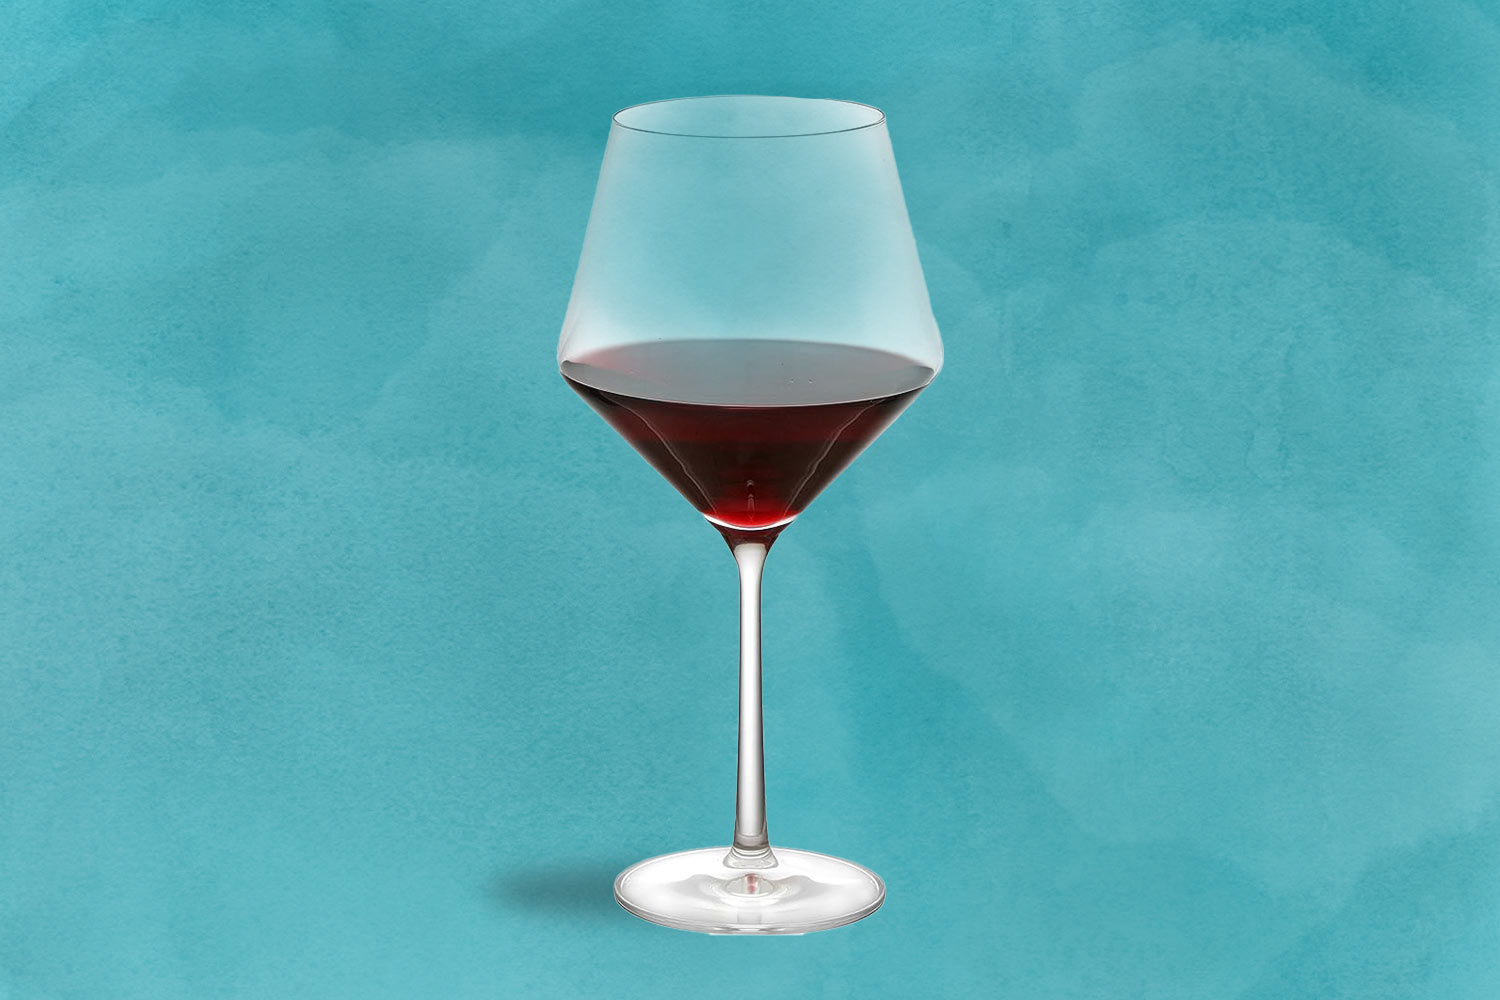 Set of 2 Pinot Noir wine glasses, made of crystalline glass, 700ml